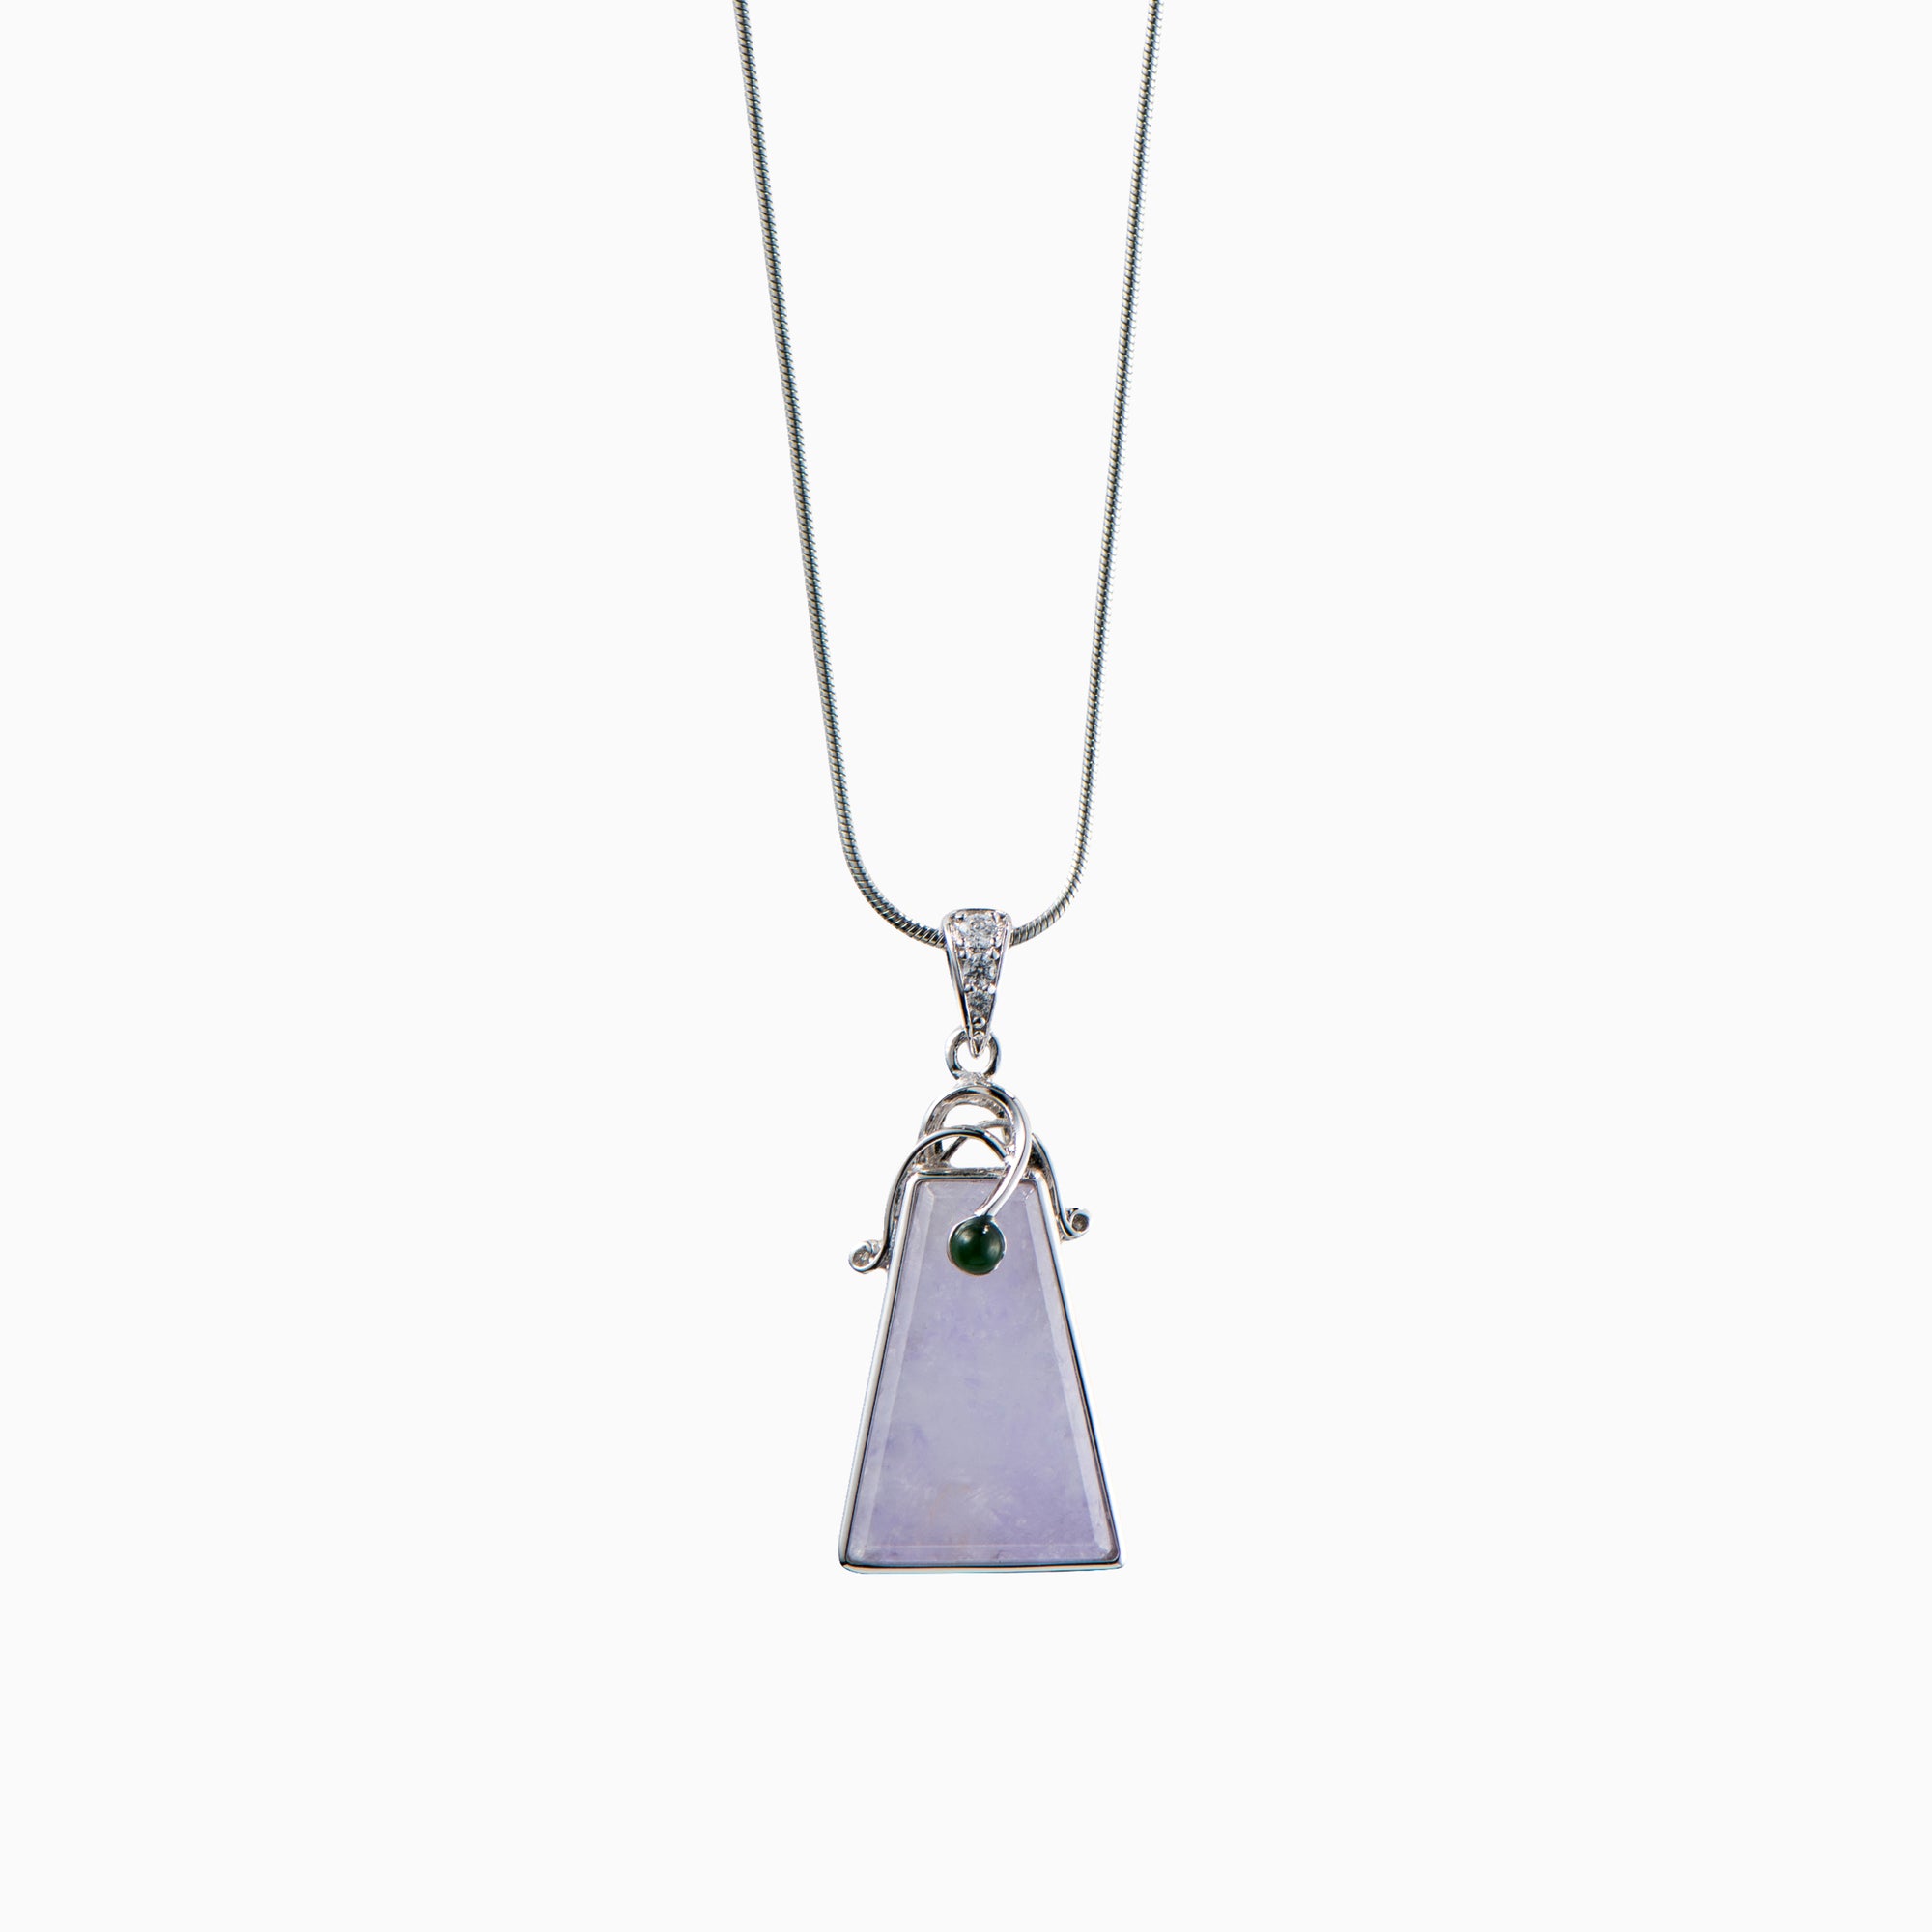 Lavender purple jade pendant with green jadeite bead and diamonds 